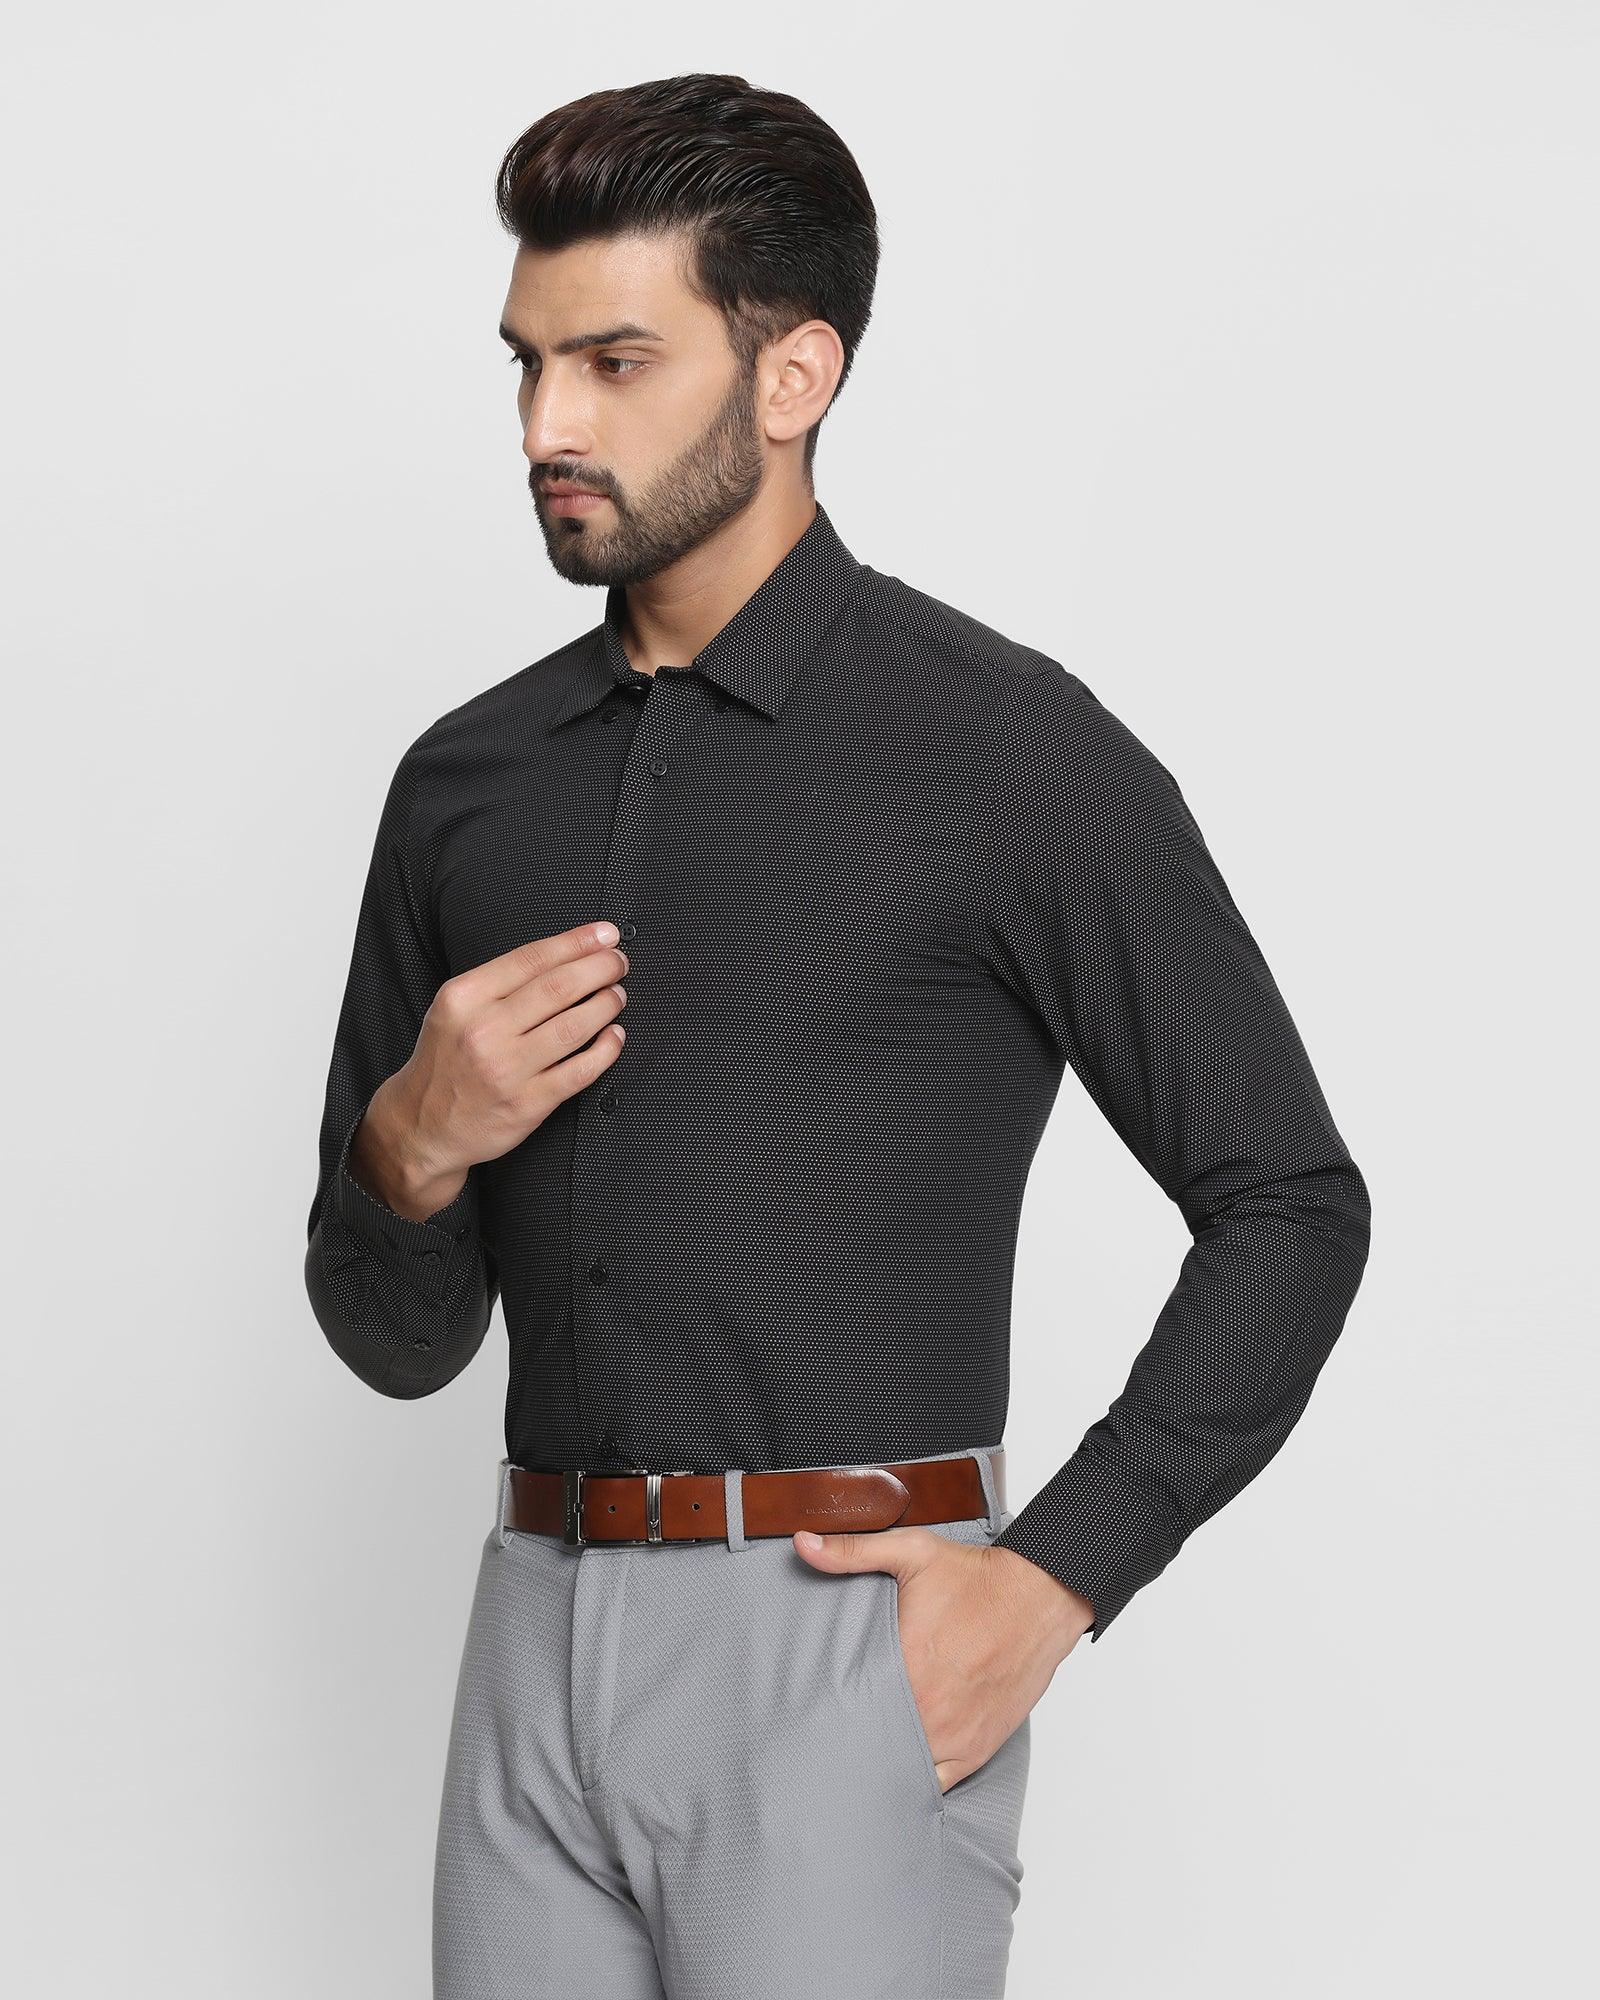 60 Dashing Formal Shirt And Pant Combinations For Men | Men fashion casual  shirts, Formal men outfit, Shirt and pants combinations for men